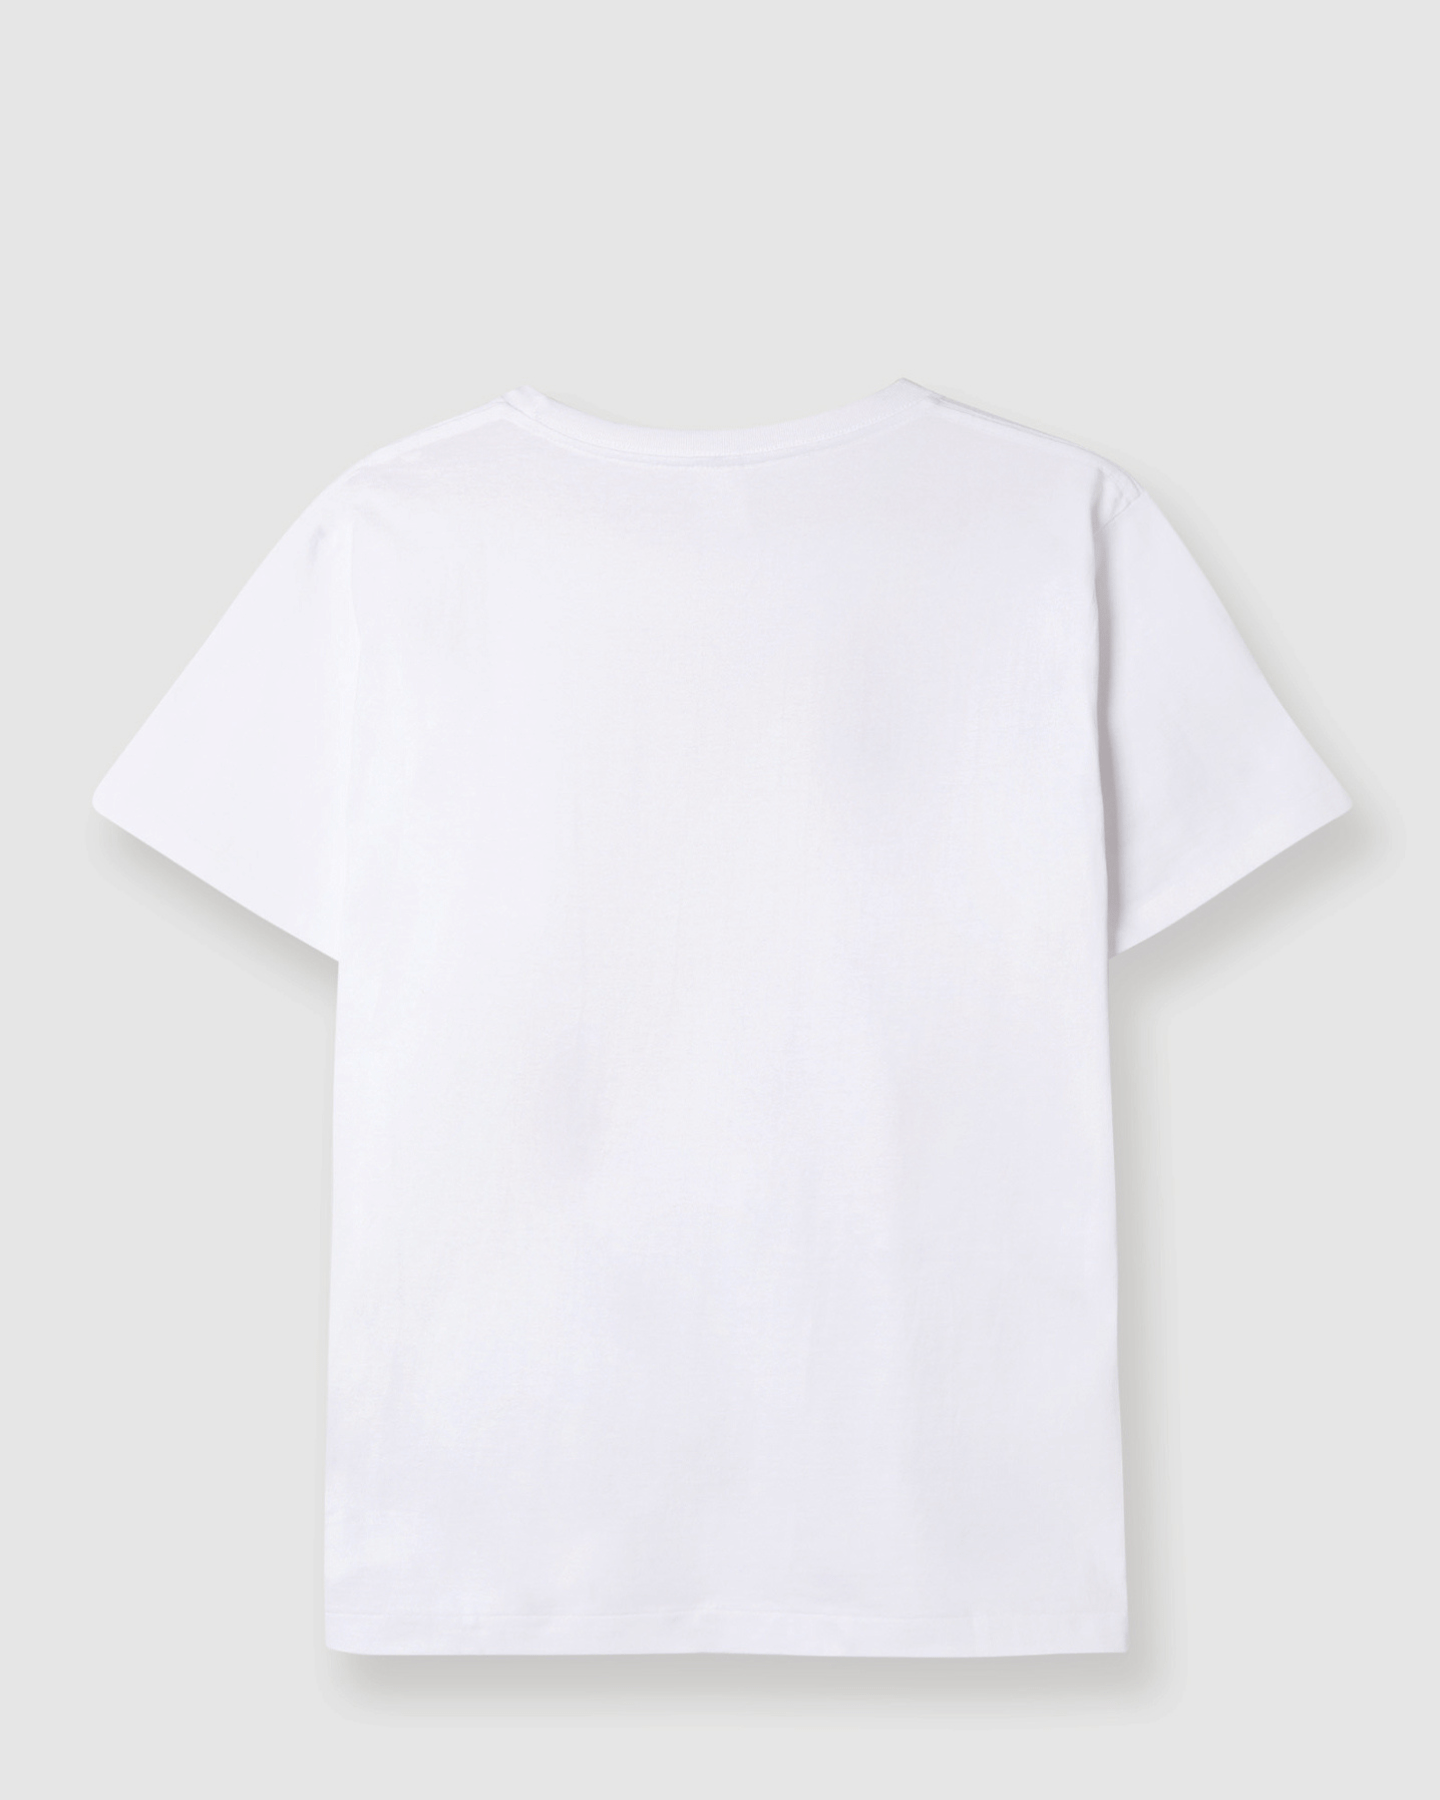 The New New S/S T-Shirt White